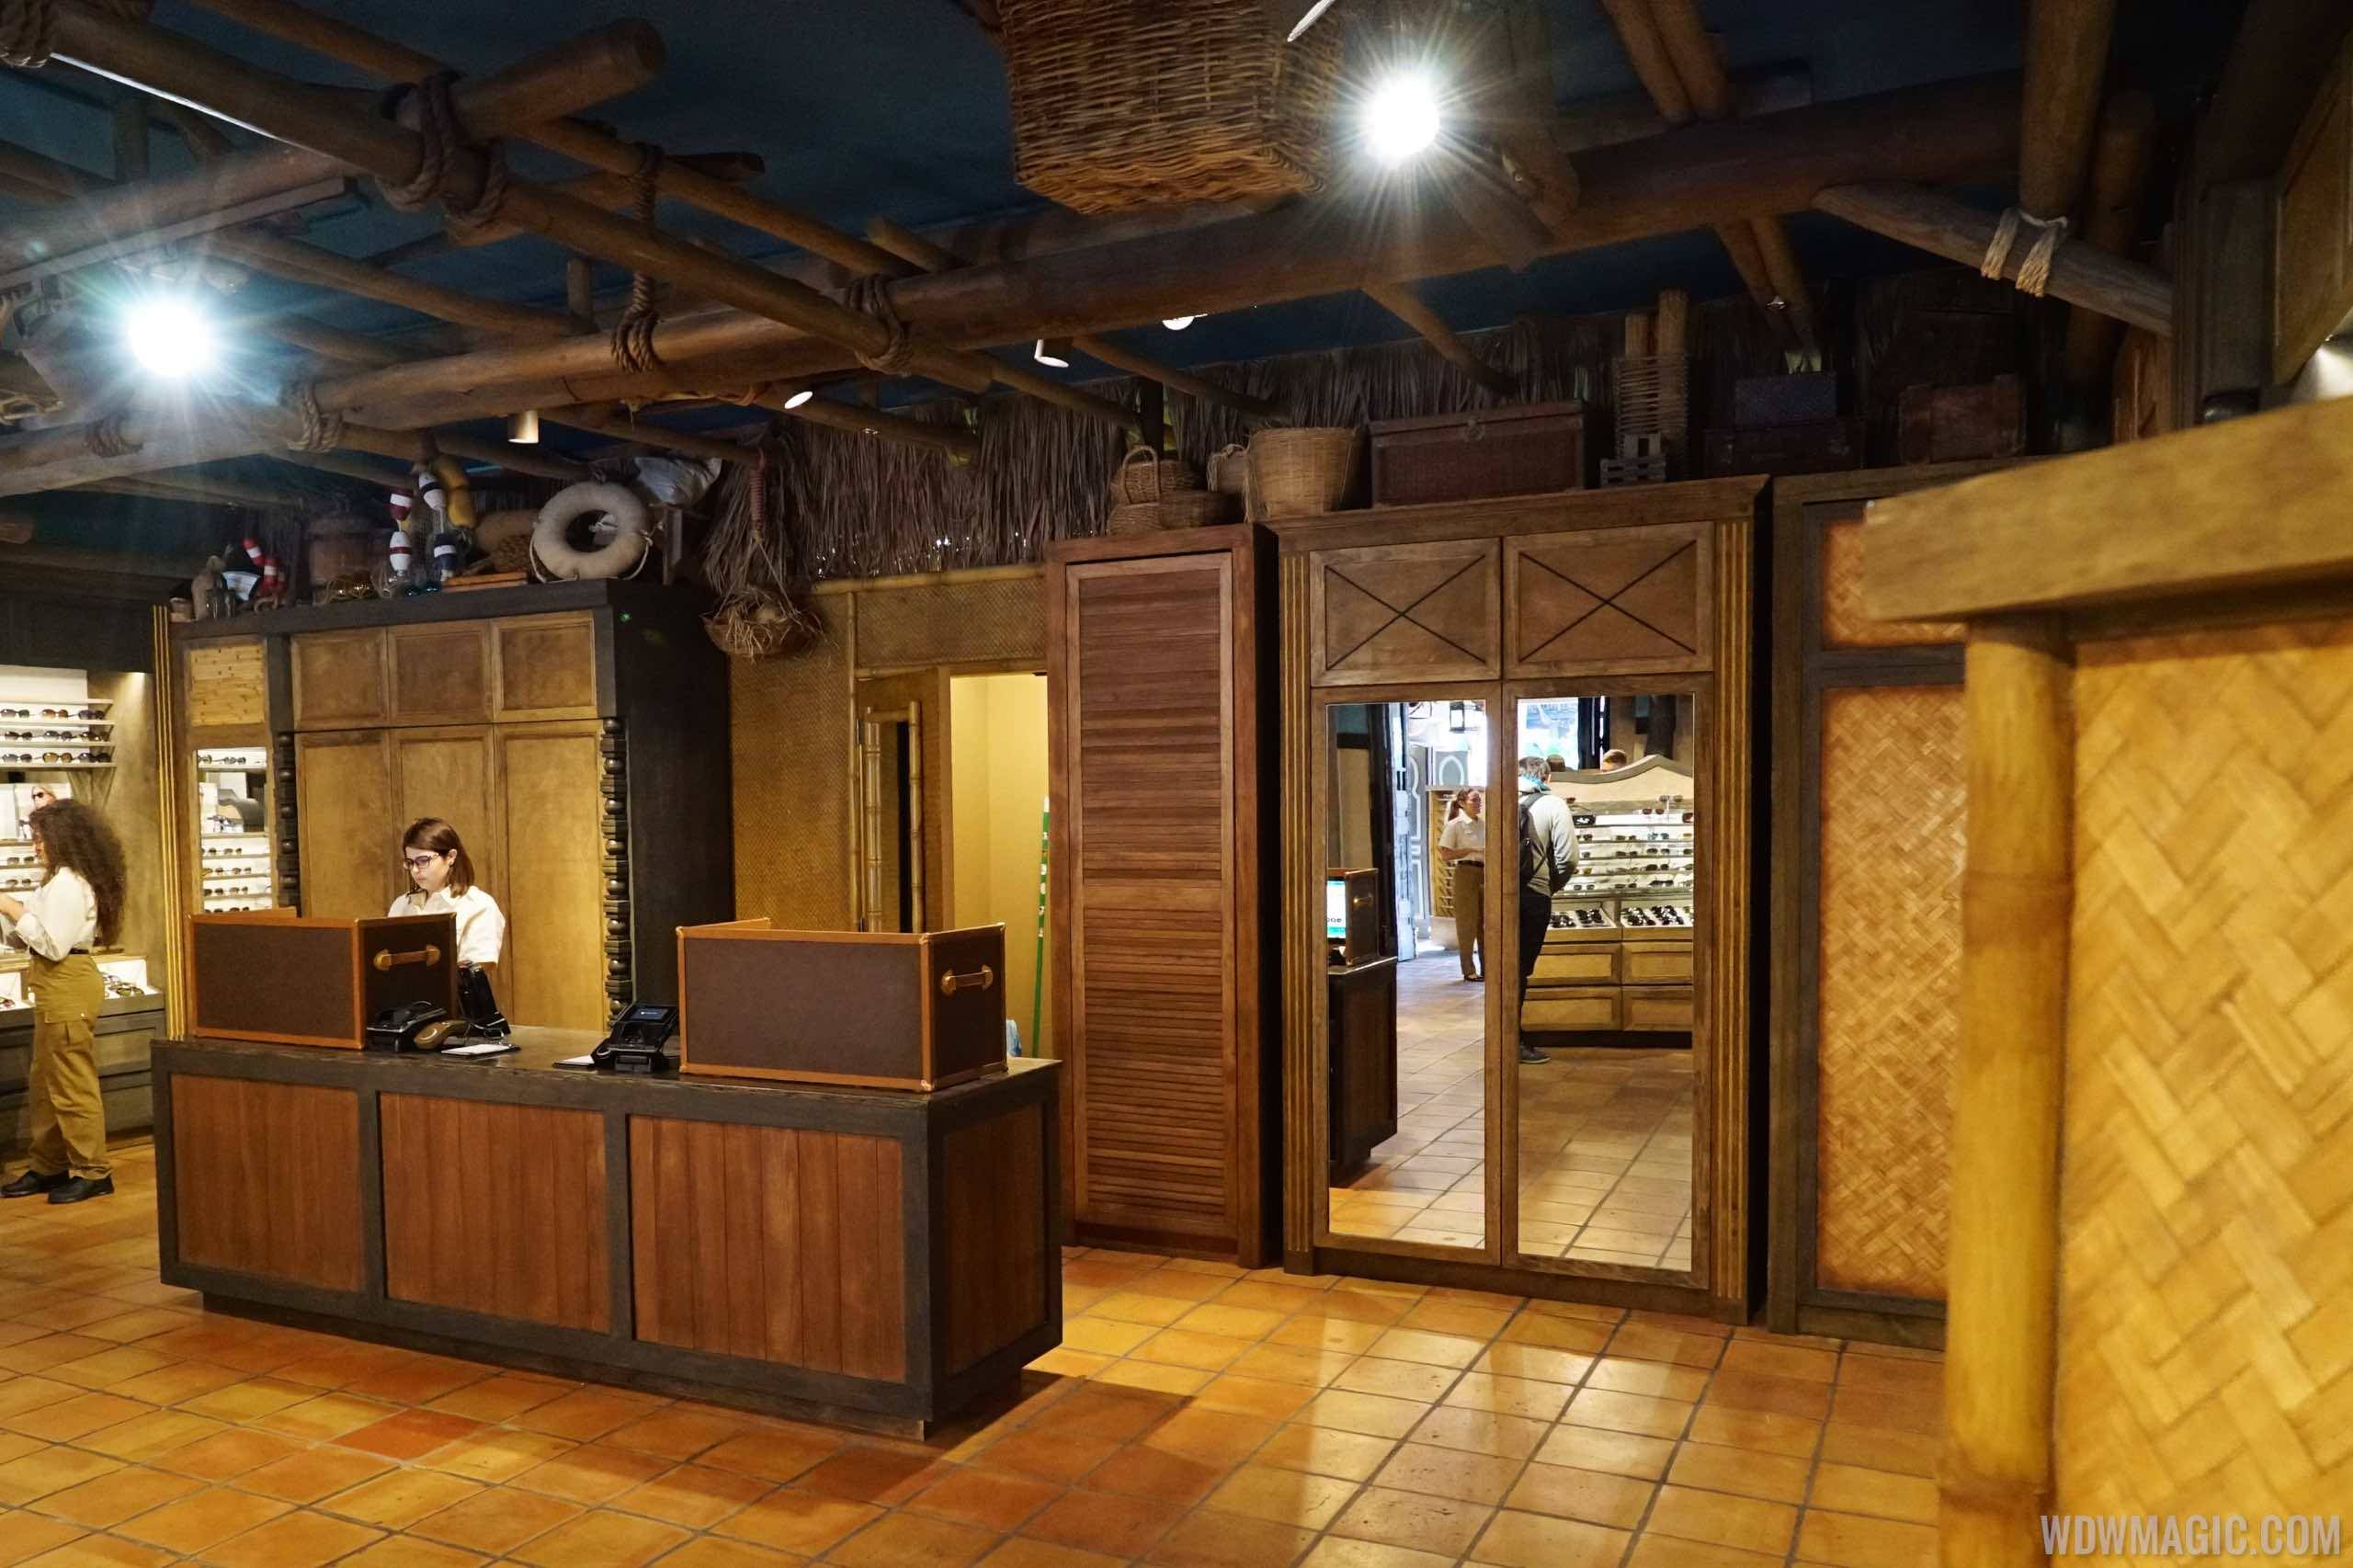 PHOTOS - A look inside the new Island Supply by Sunglass Hut in the Magic Kingdom's Adventureland